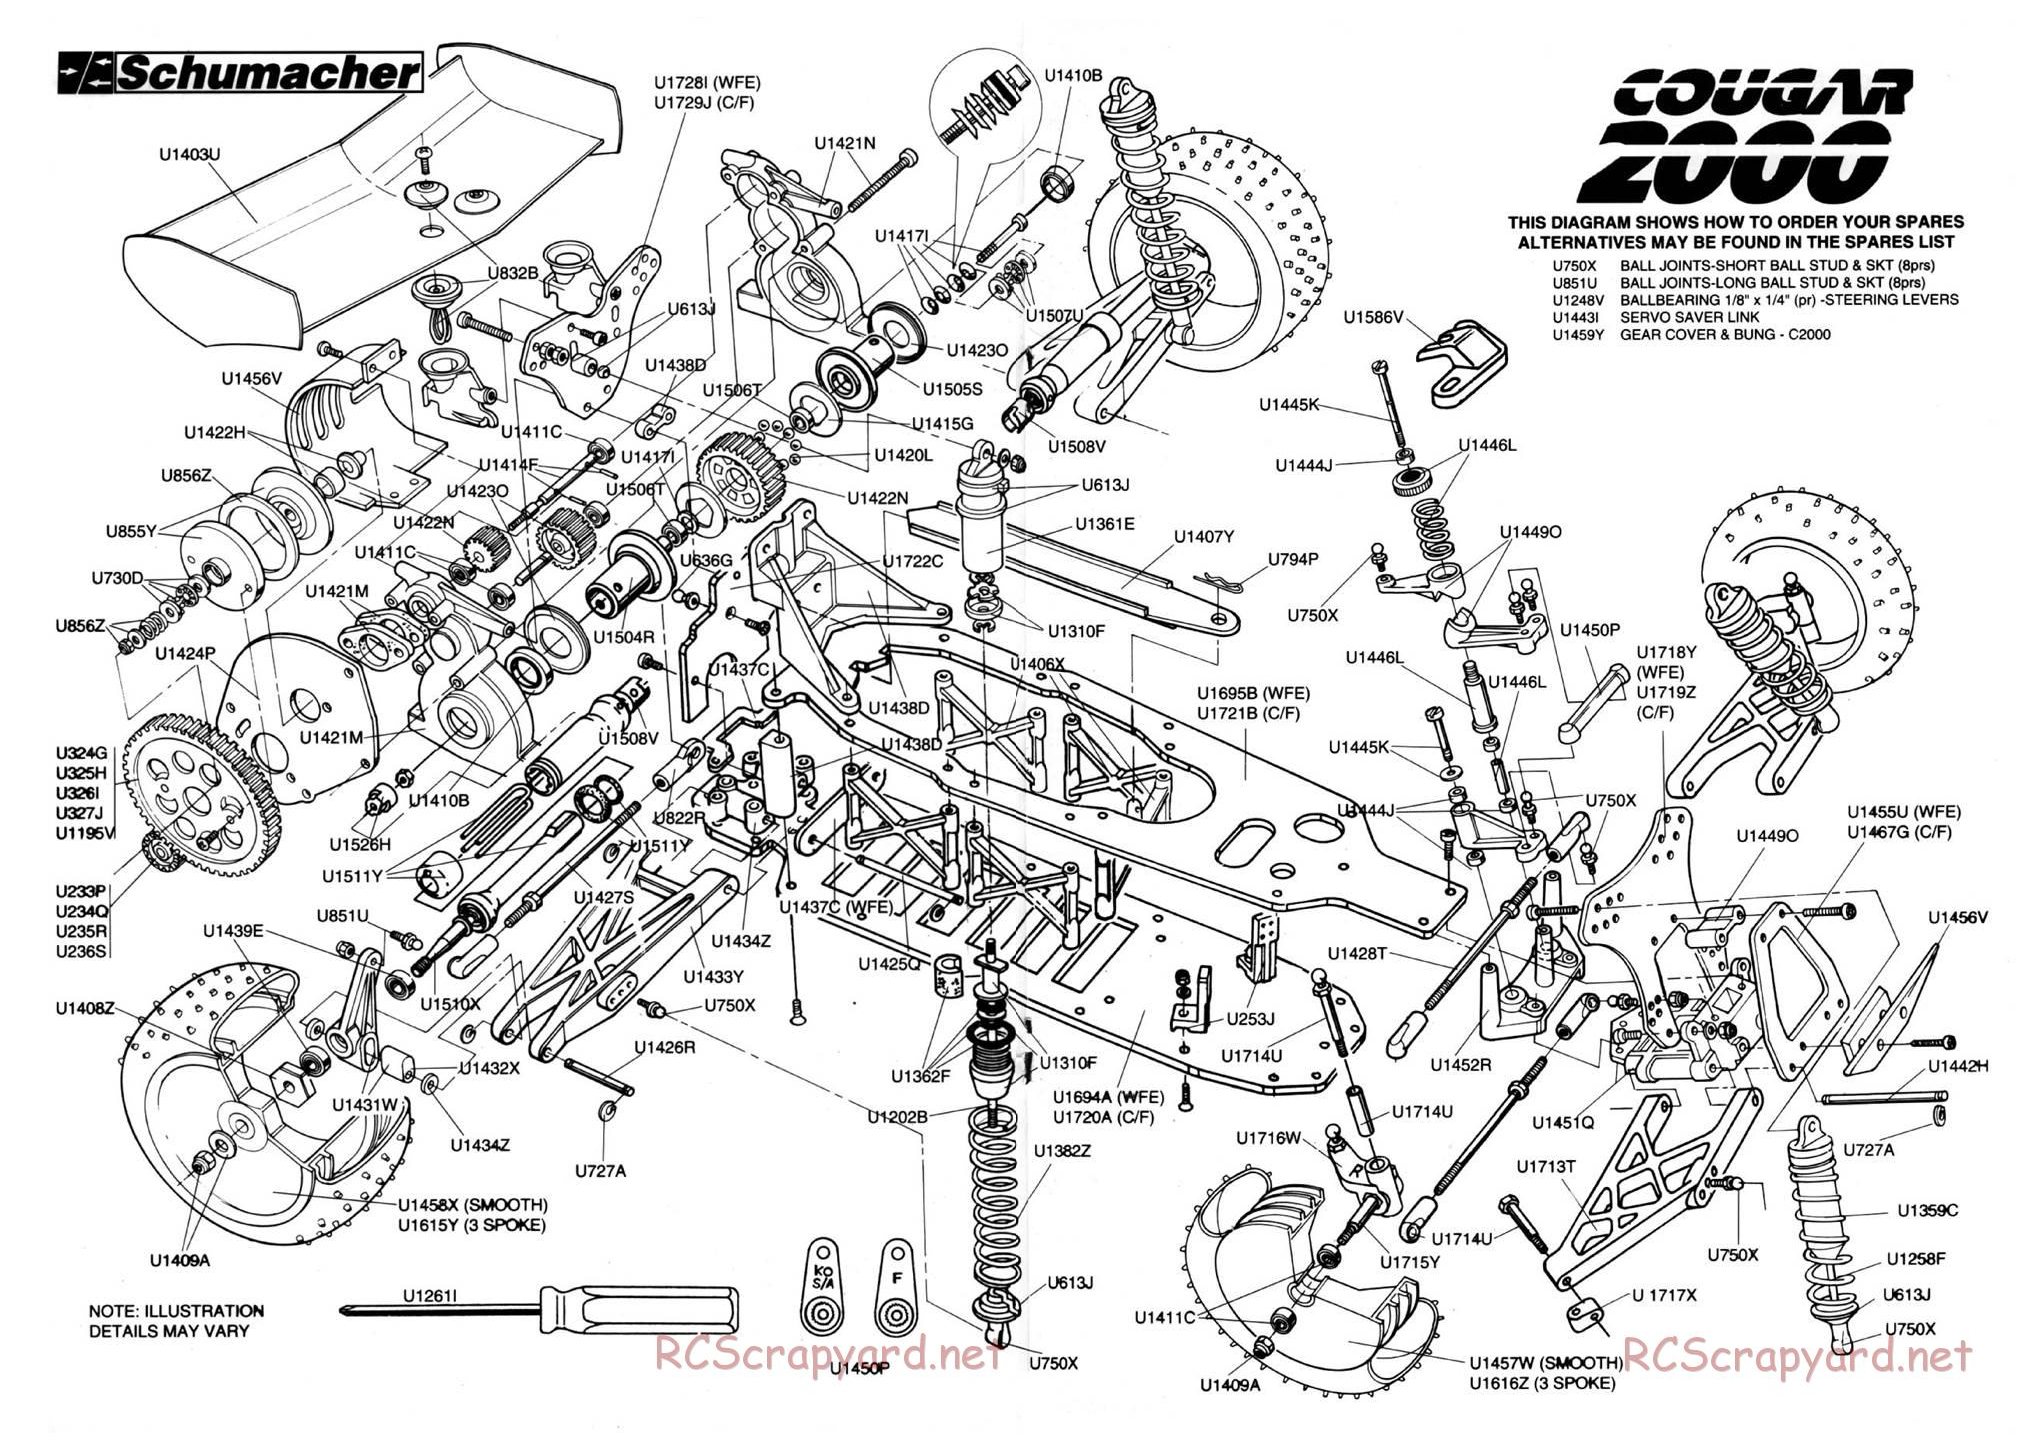 Schumacher - Cougar 2000 - Exploded View